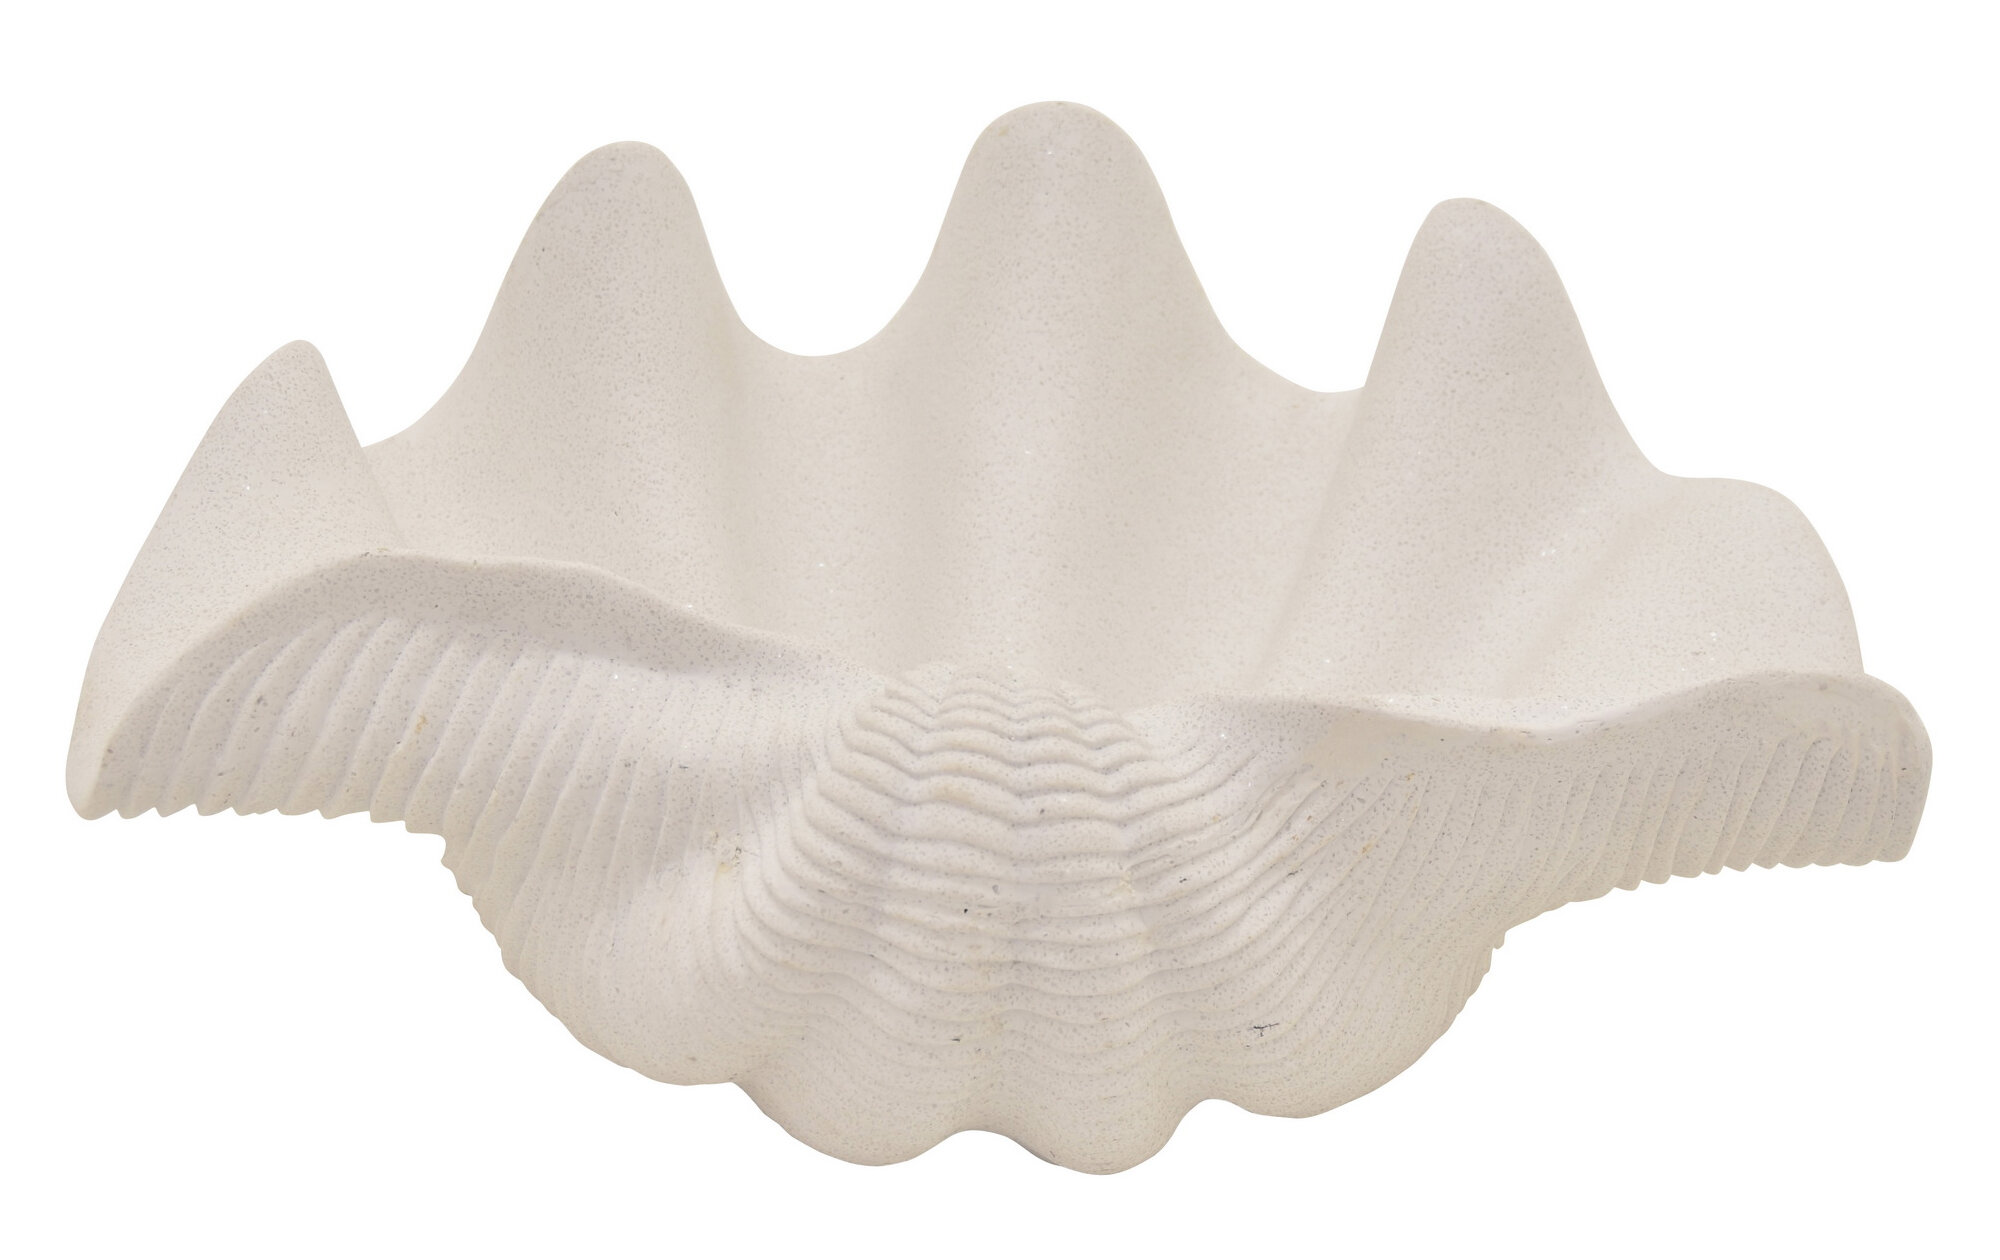 Highland Dunes Vanhouten Clam Shell Decorative Bowl Wayfair